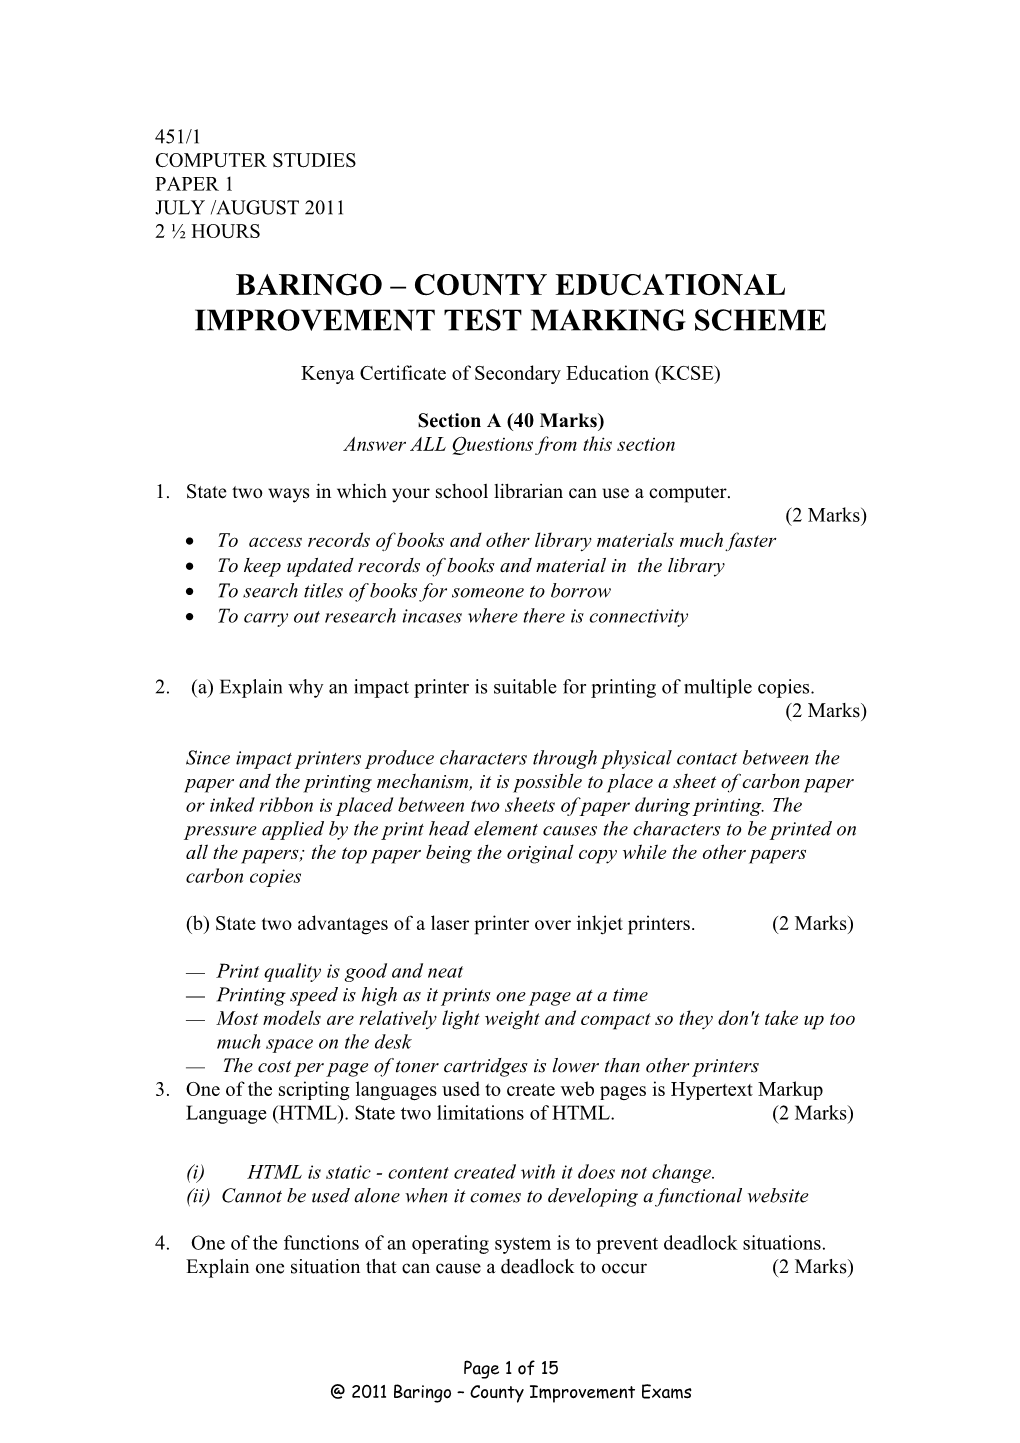 Baringo County Educational Improvement Test Marking Scheme